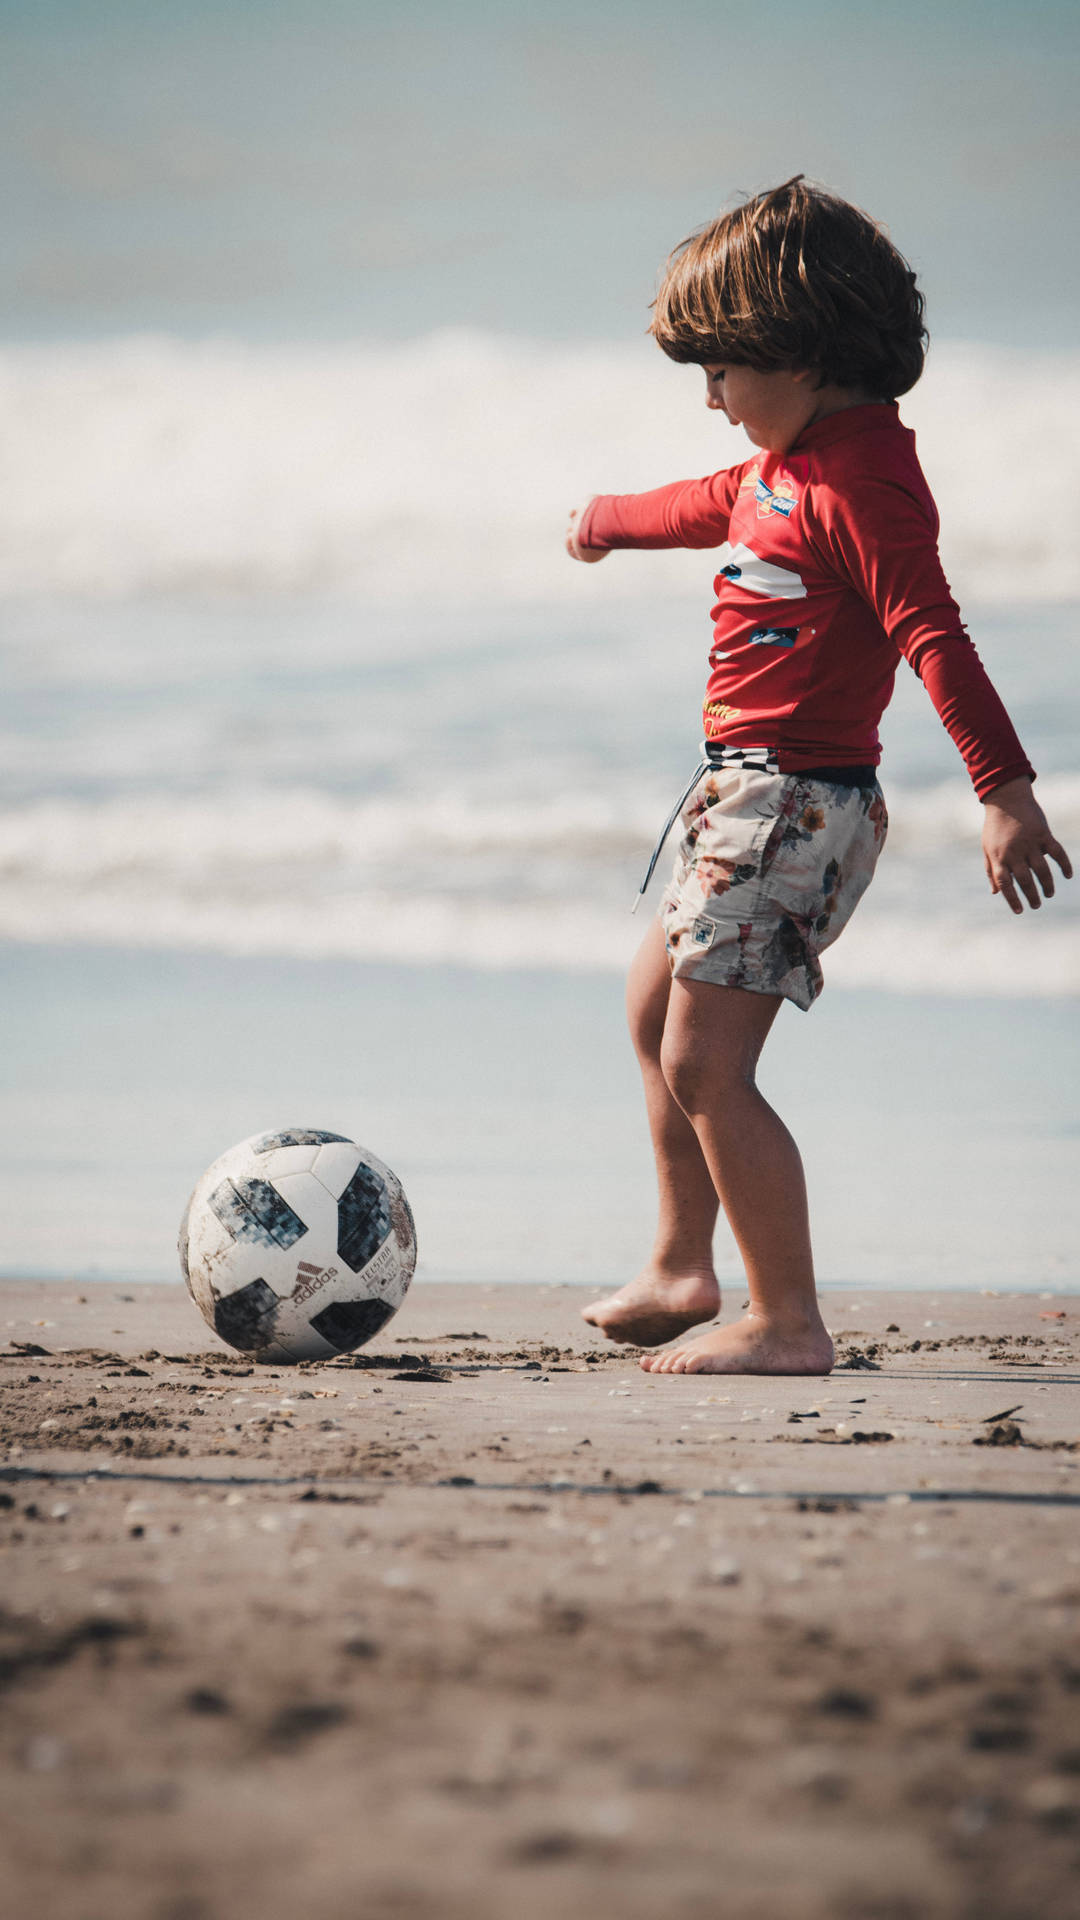 Bocce Ball Child Playing On Beach Wallpaper